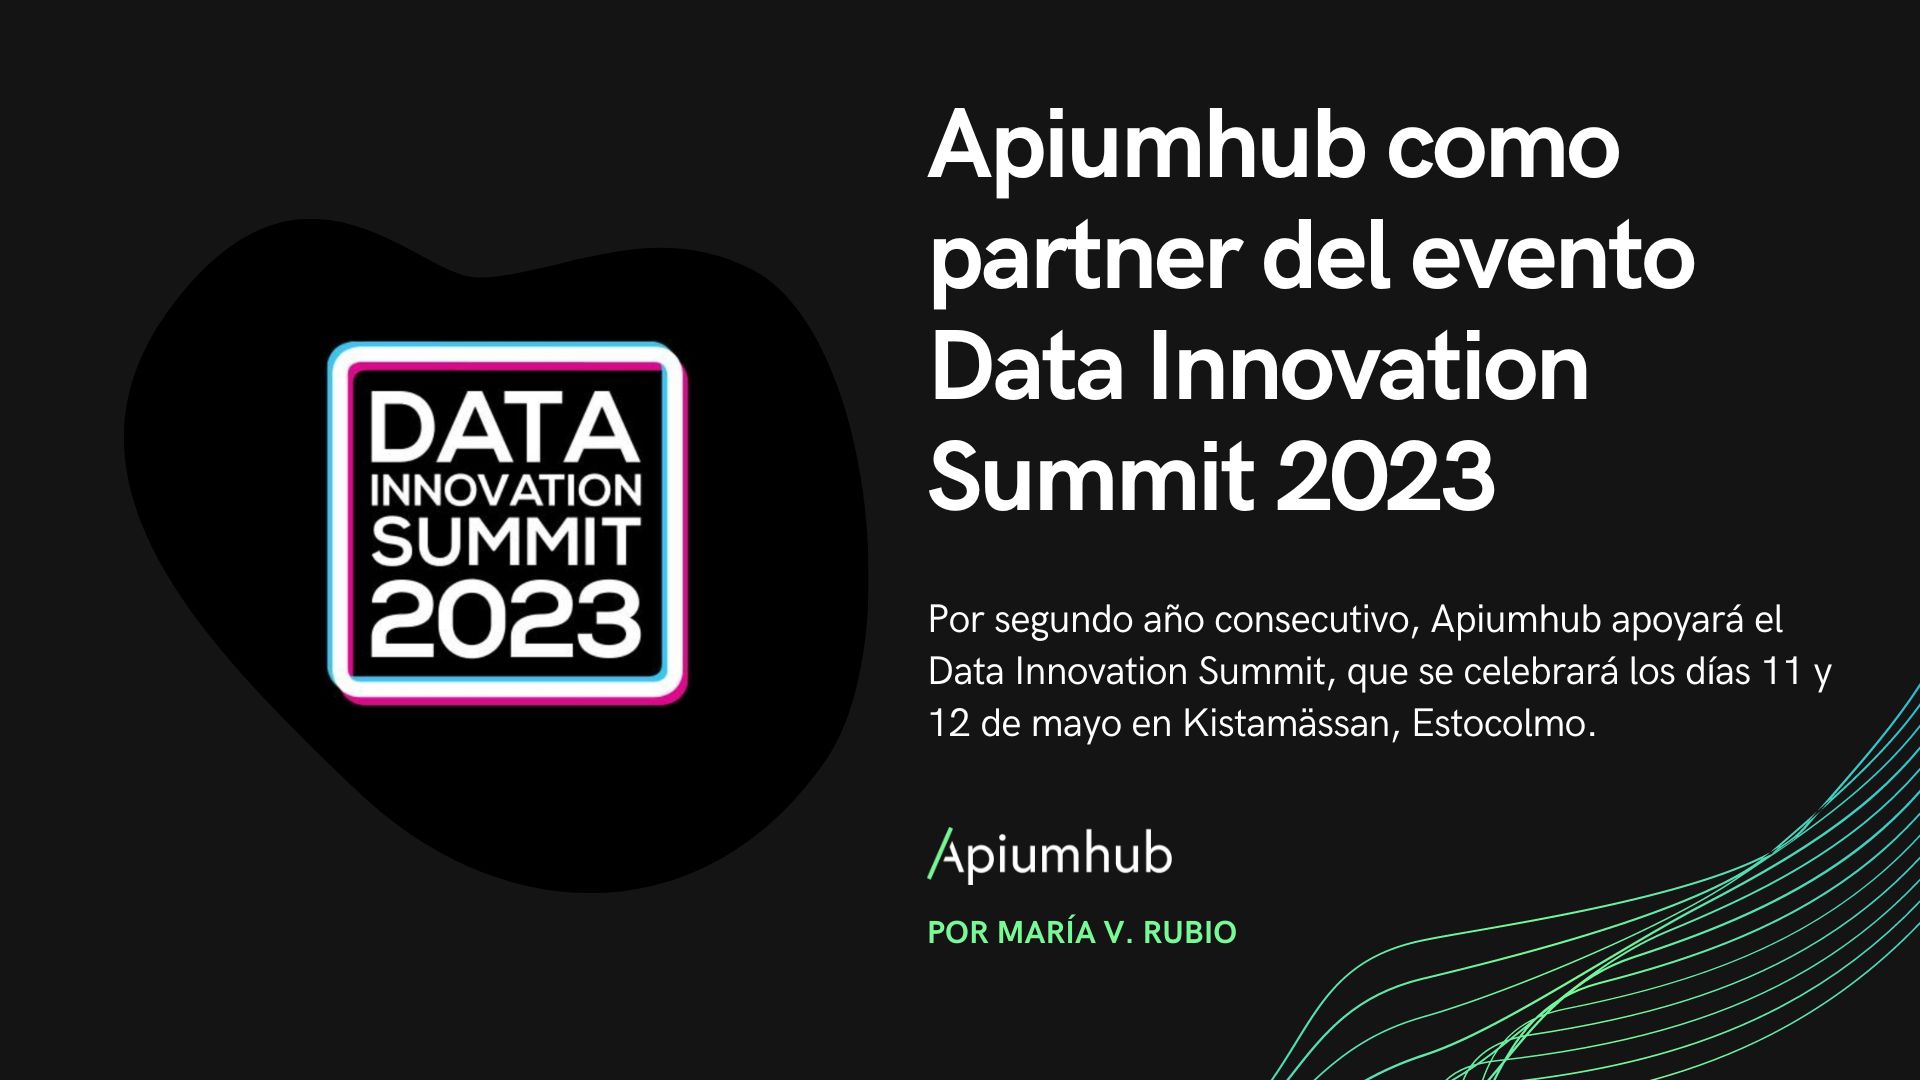 Apiumhub como partner del evento Data Innovation Summit 2023